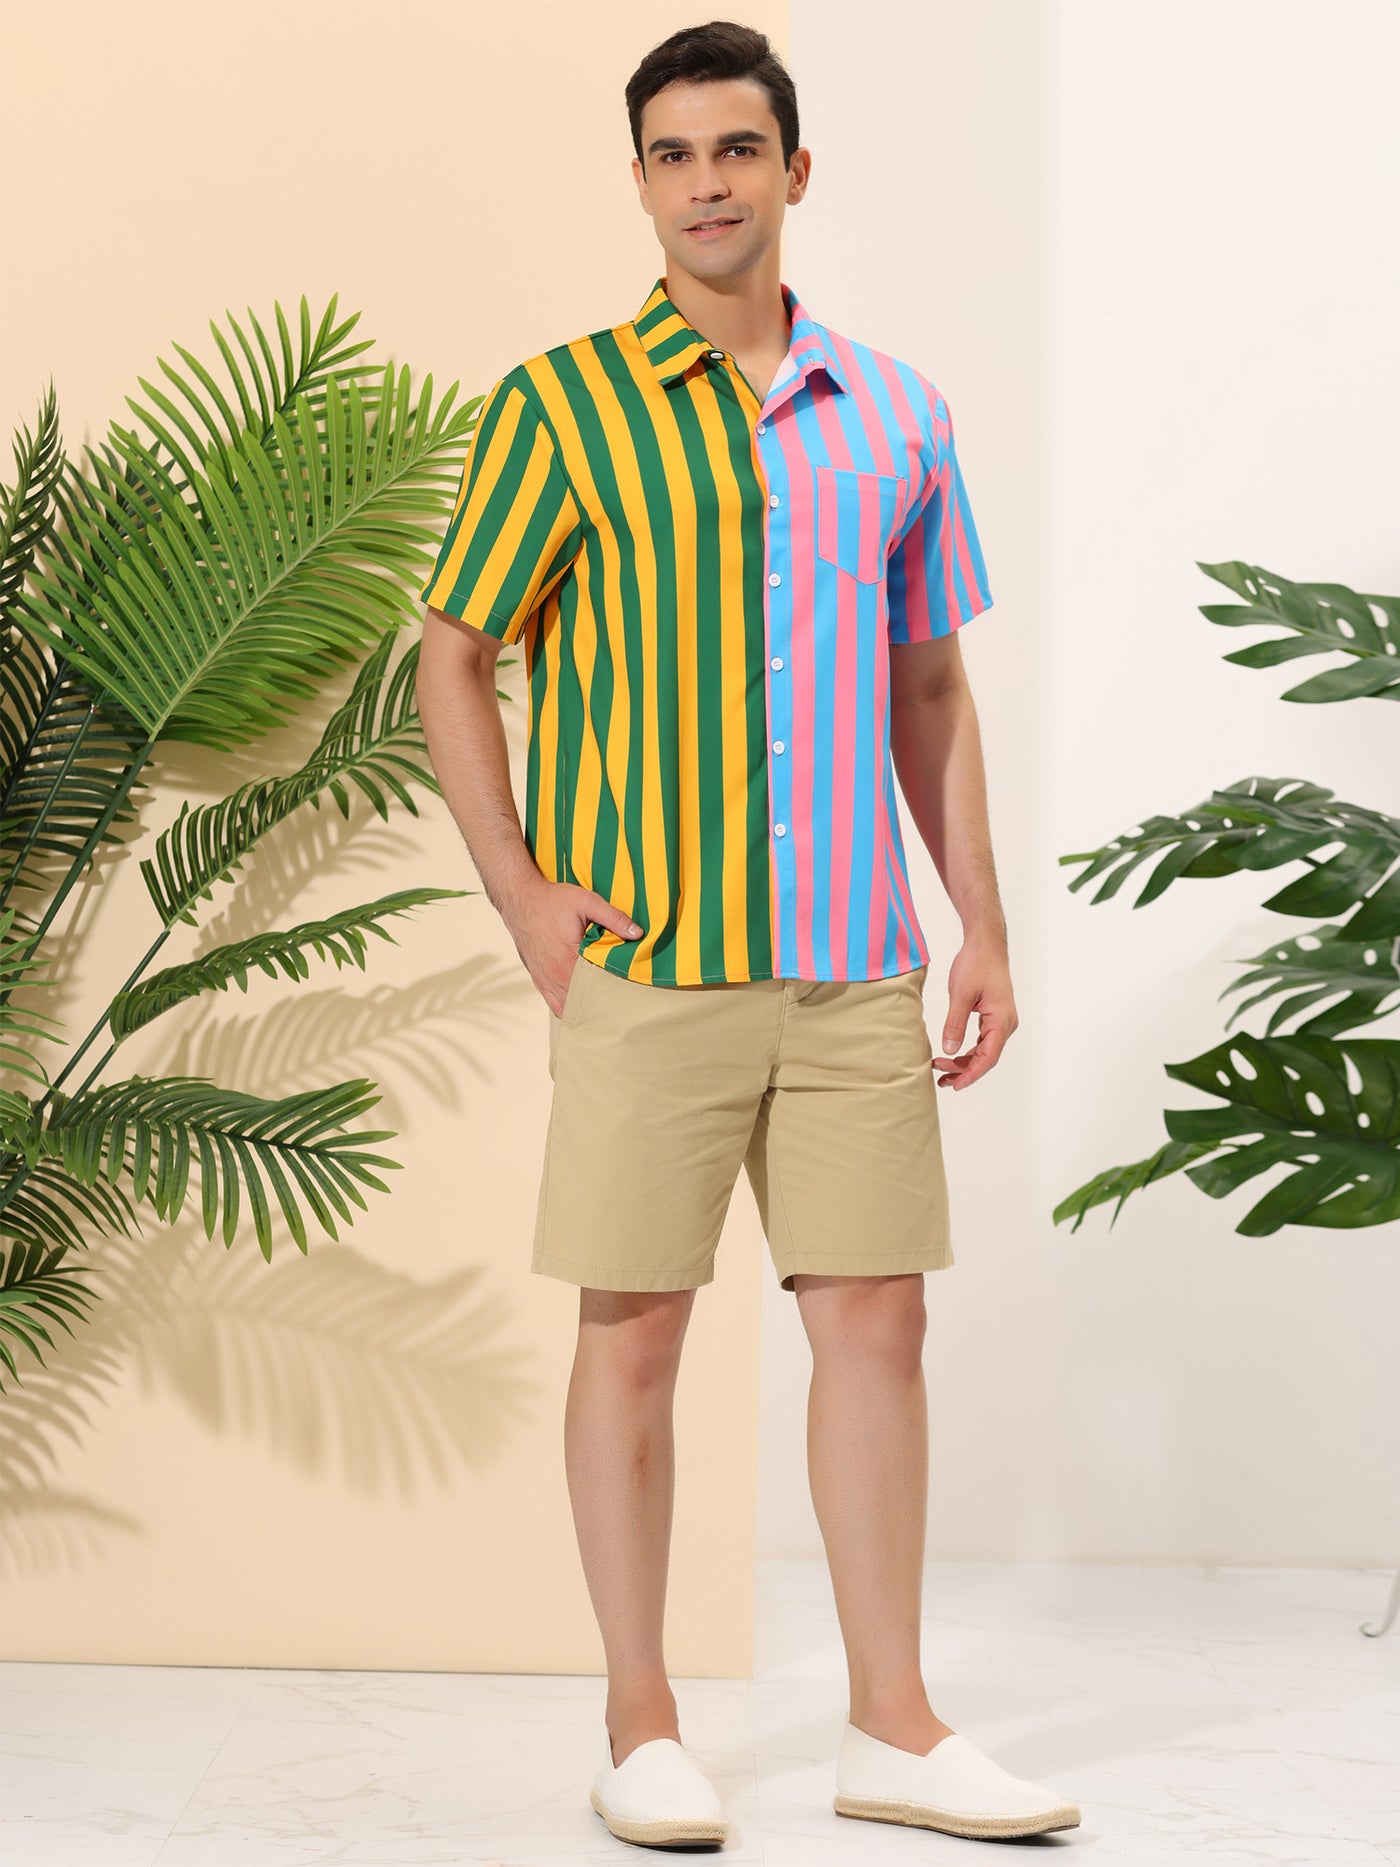 Bublédon Casual Summer Vertical Striped Patchwork Shirts